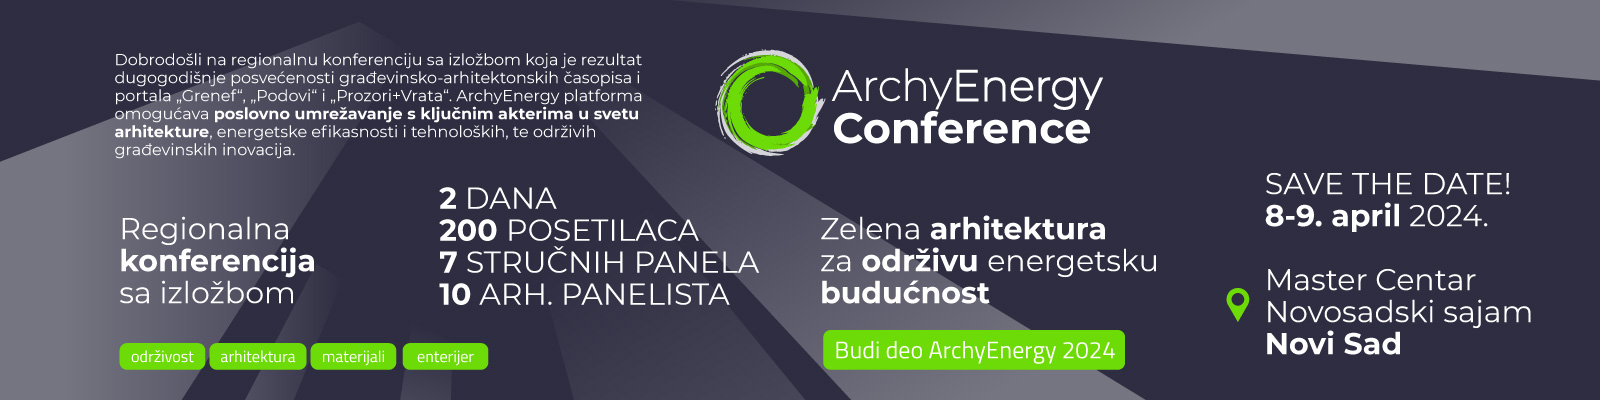 Grenef  ArchyEnergy konferencija